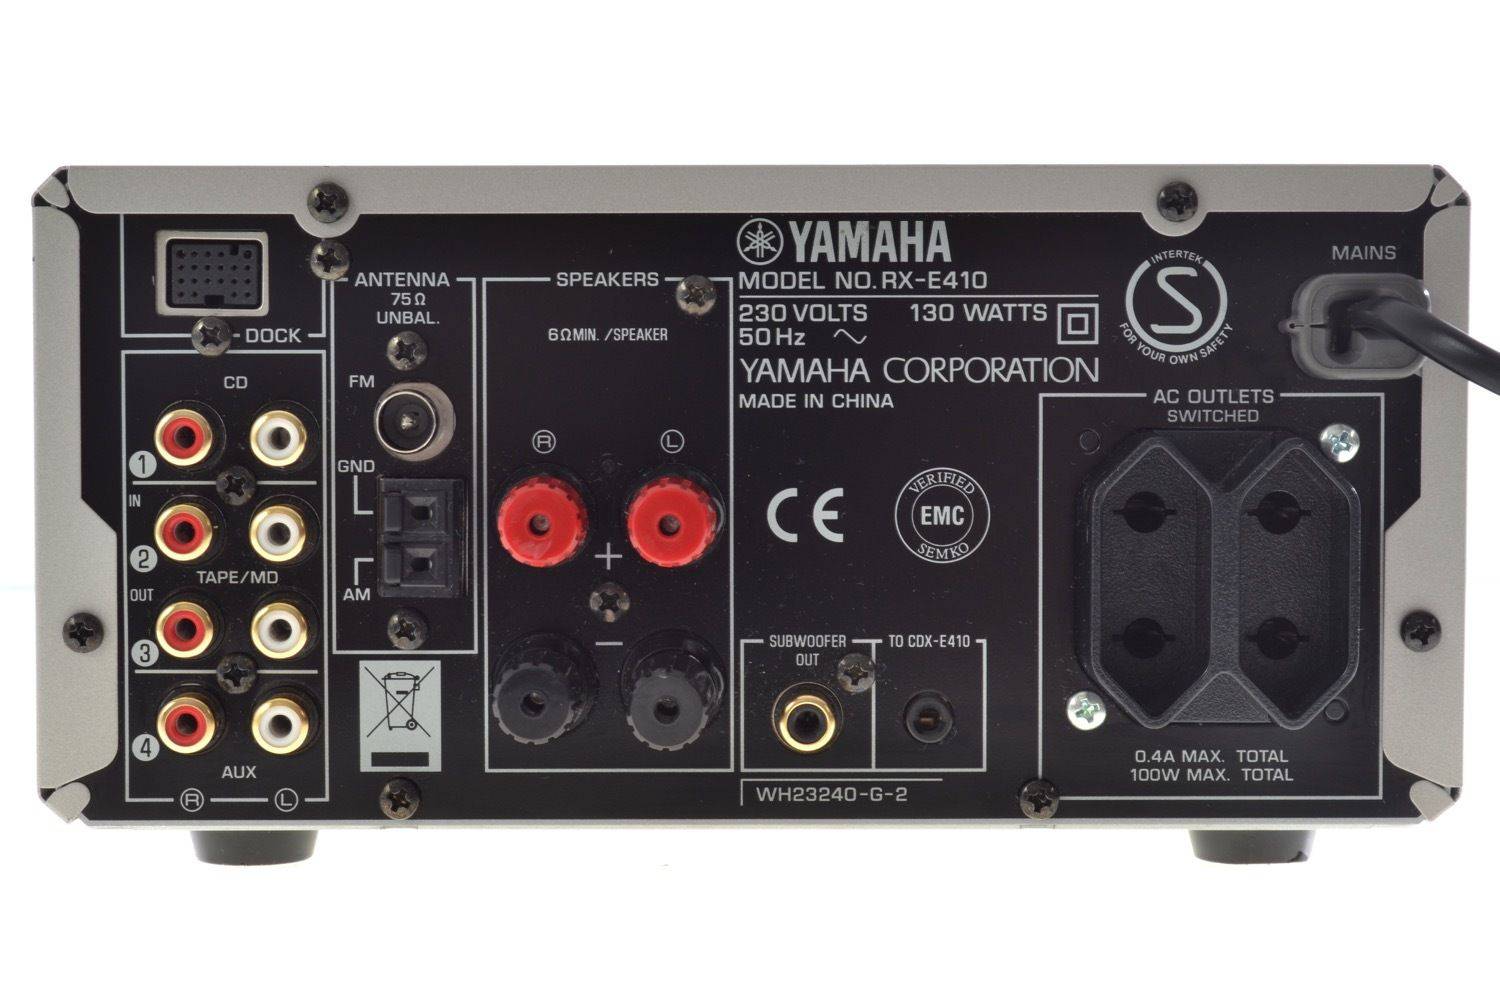 Yamaha RX-E410